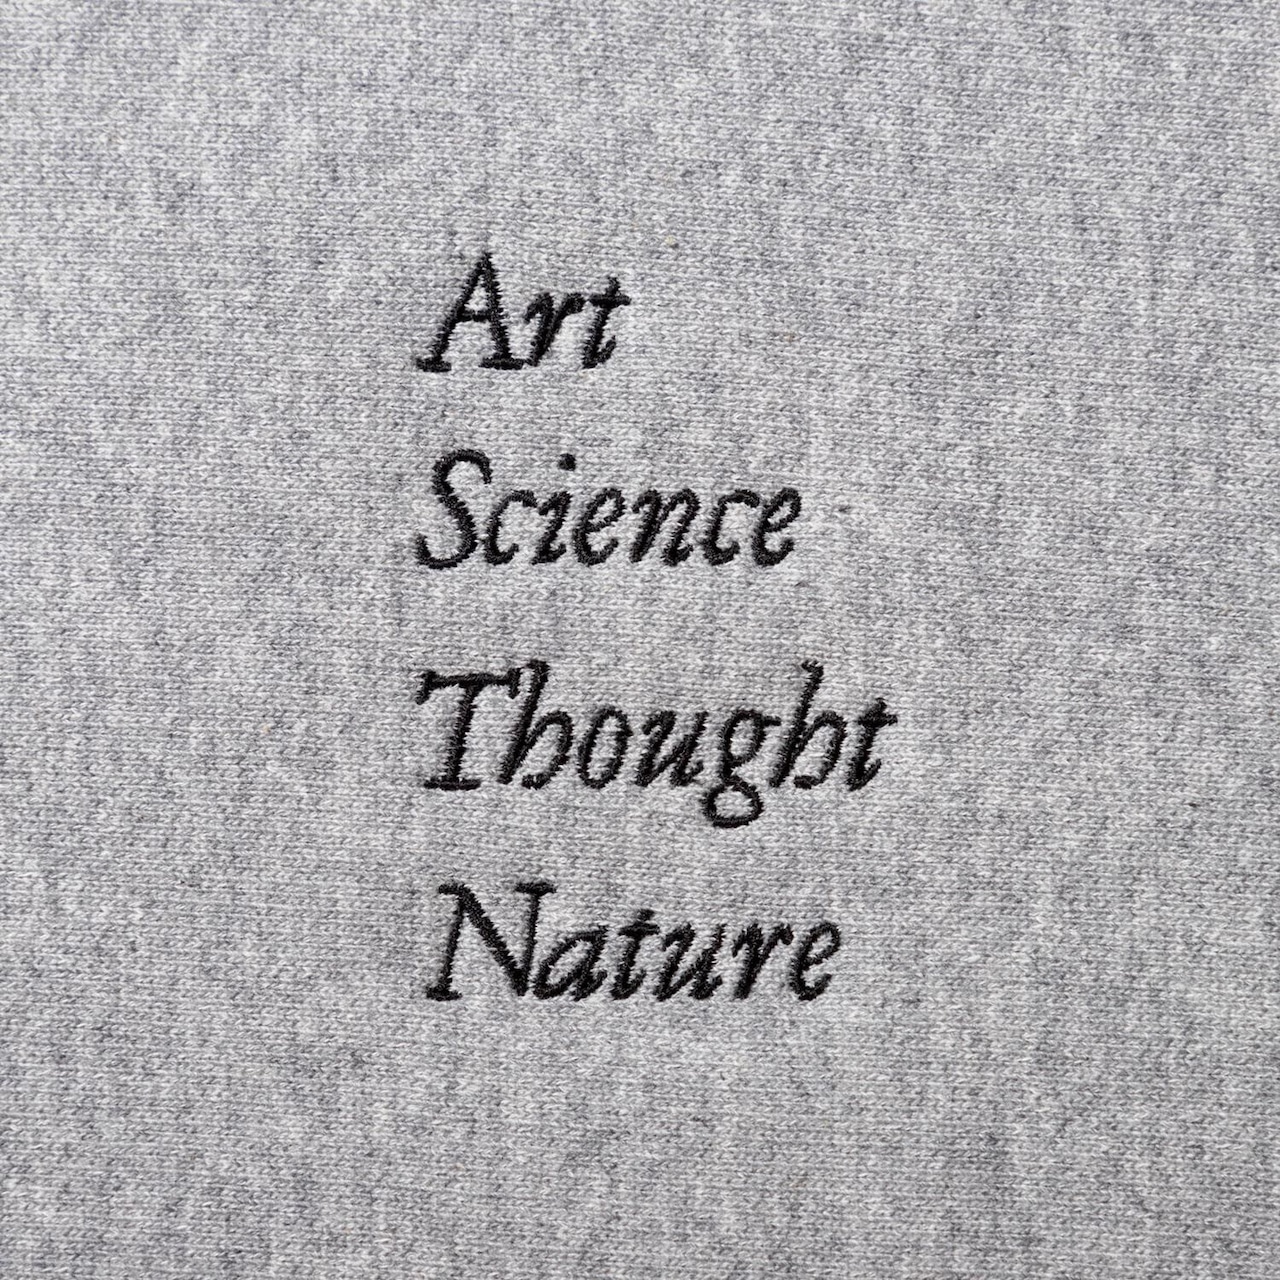 TACOMA FUJI RECORDS / Art Science Thought Nature HOODIE designed by Shuntaro Watanabe